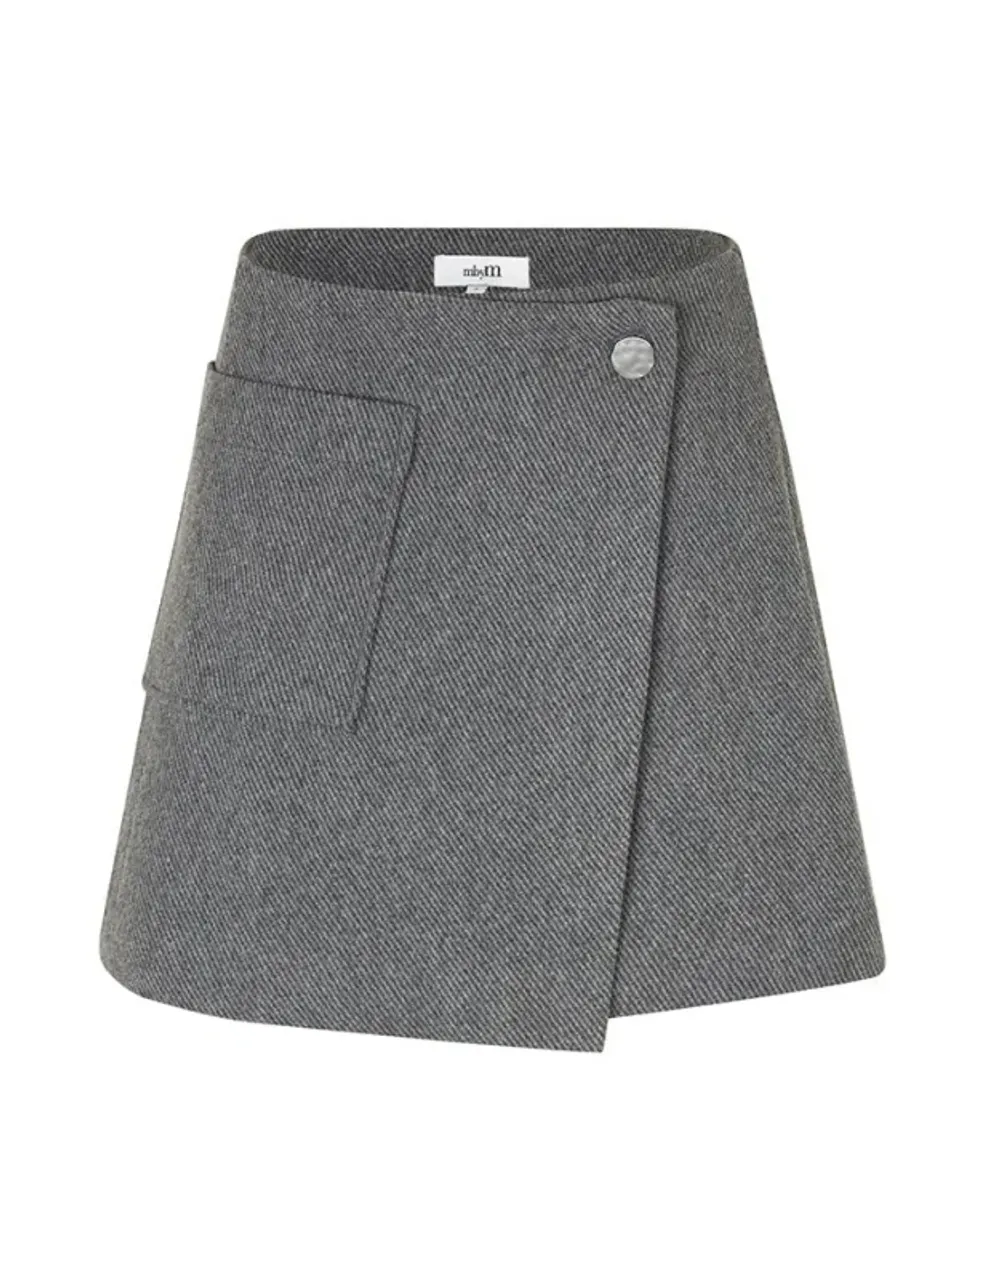 MbyM Keya skirt grey -